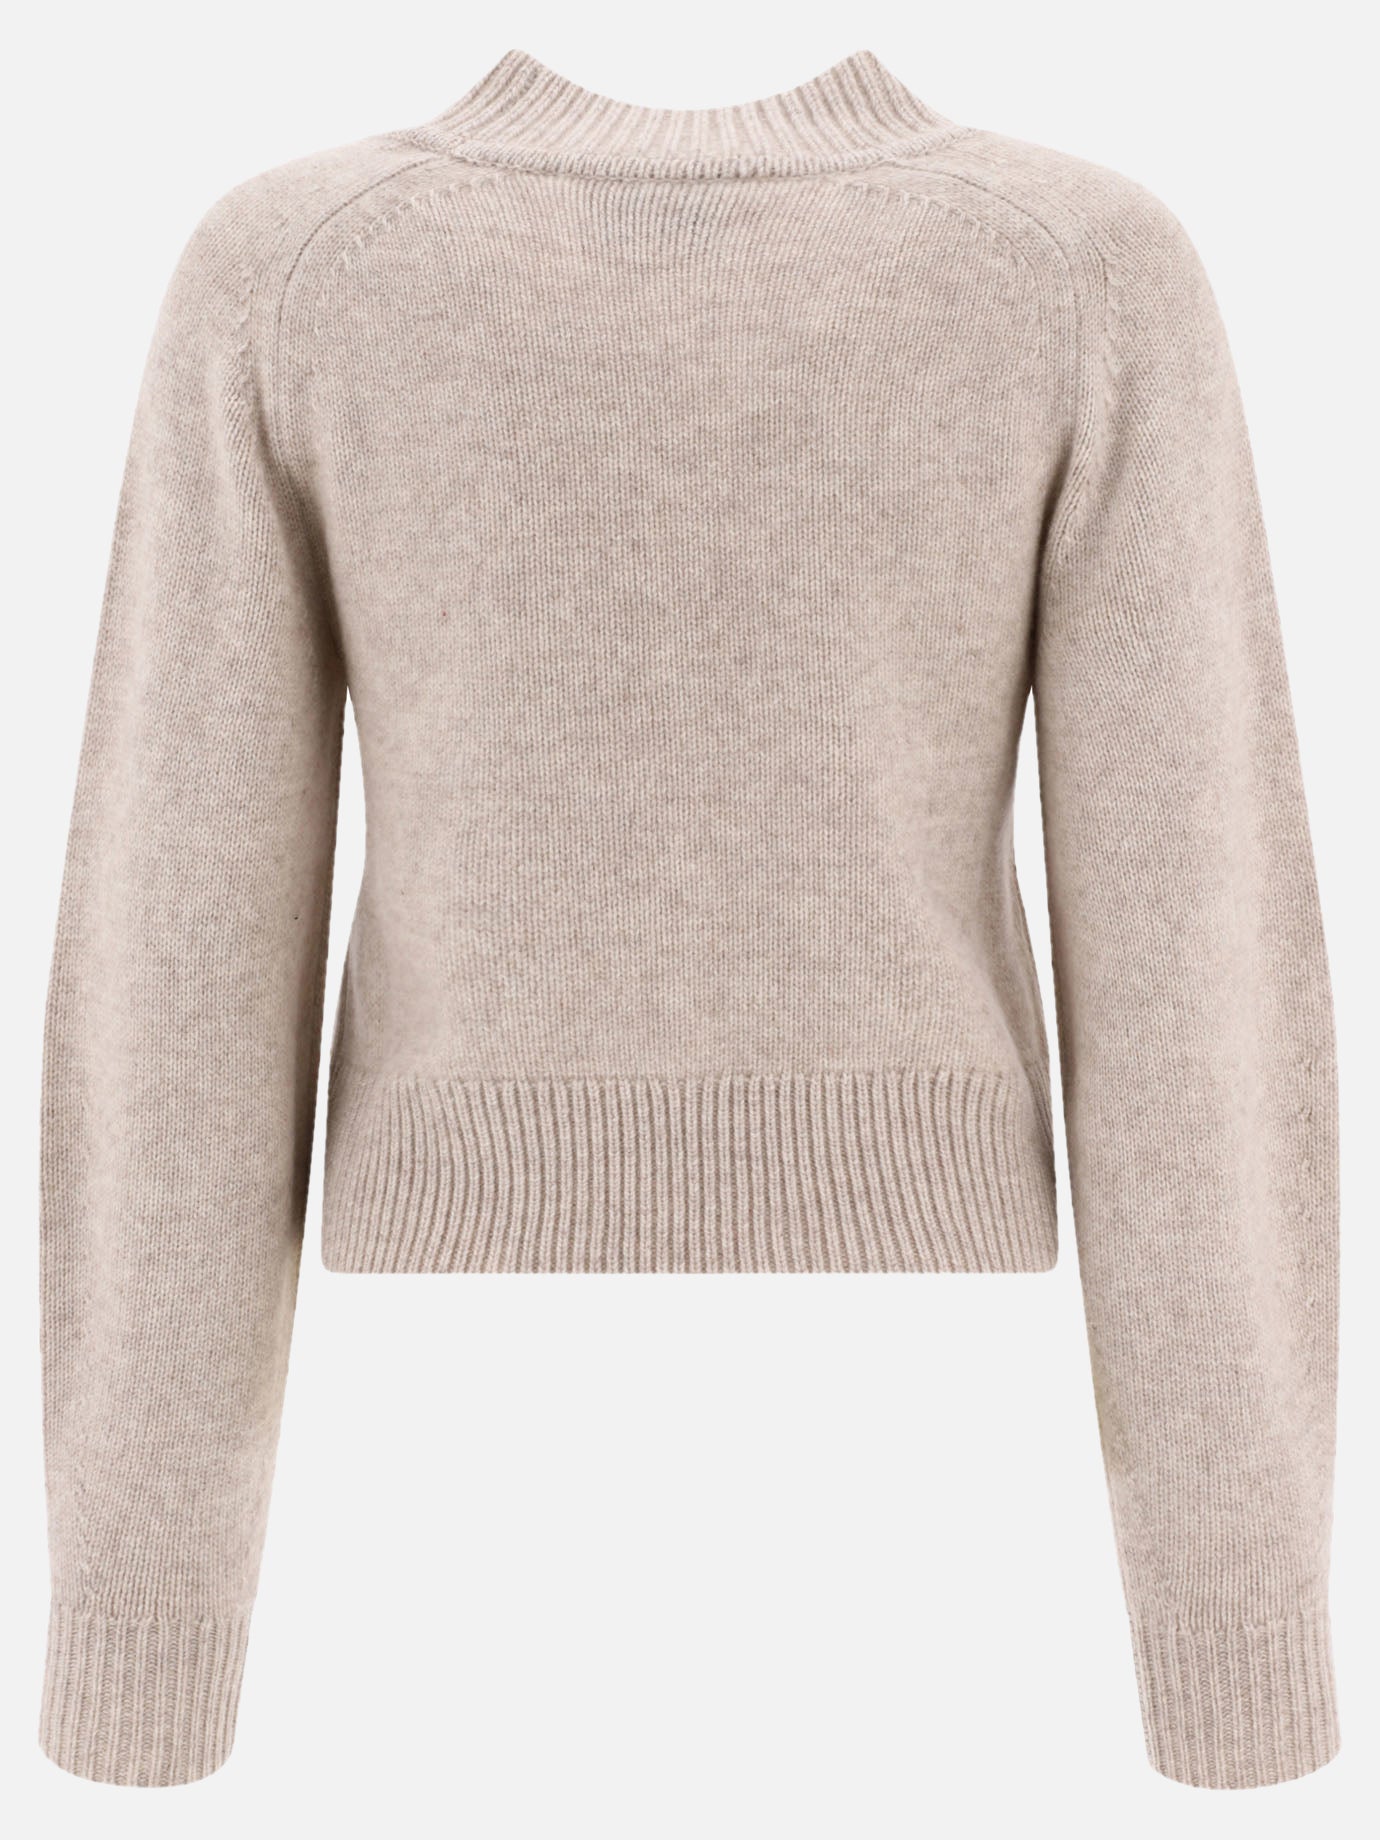 "Leandra" sweater